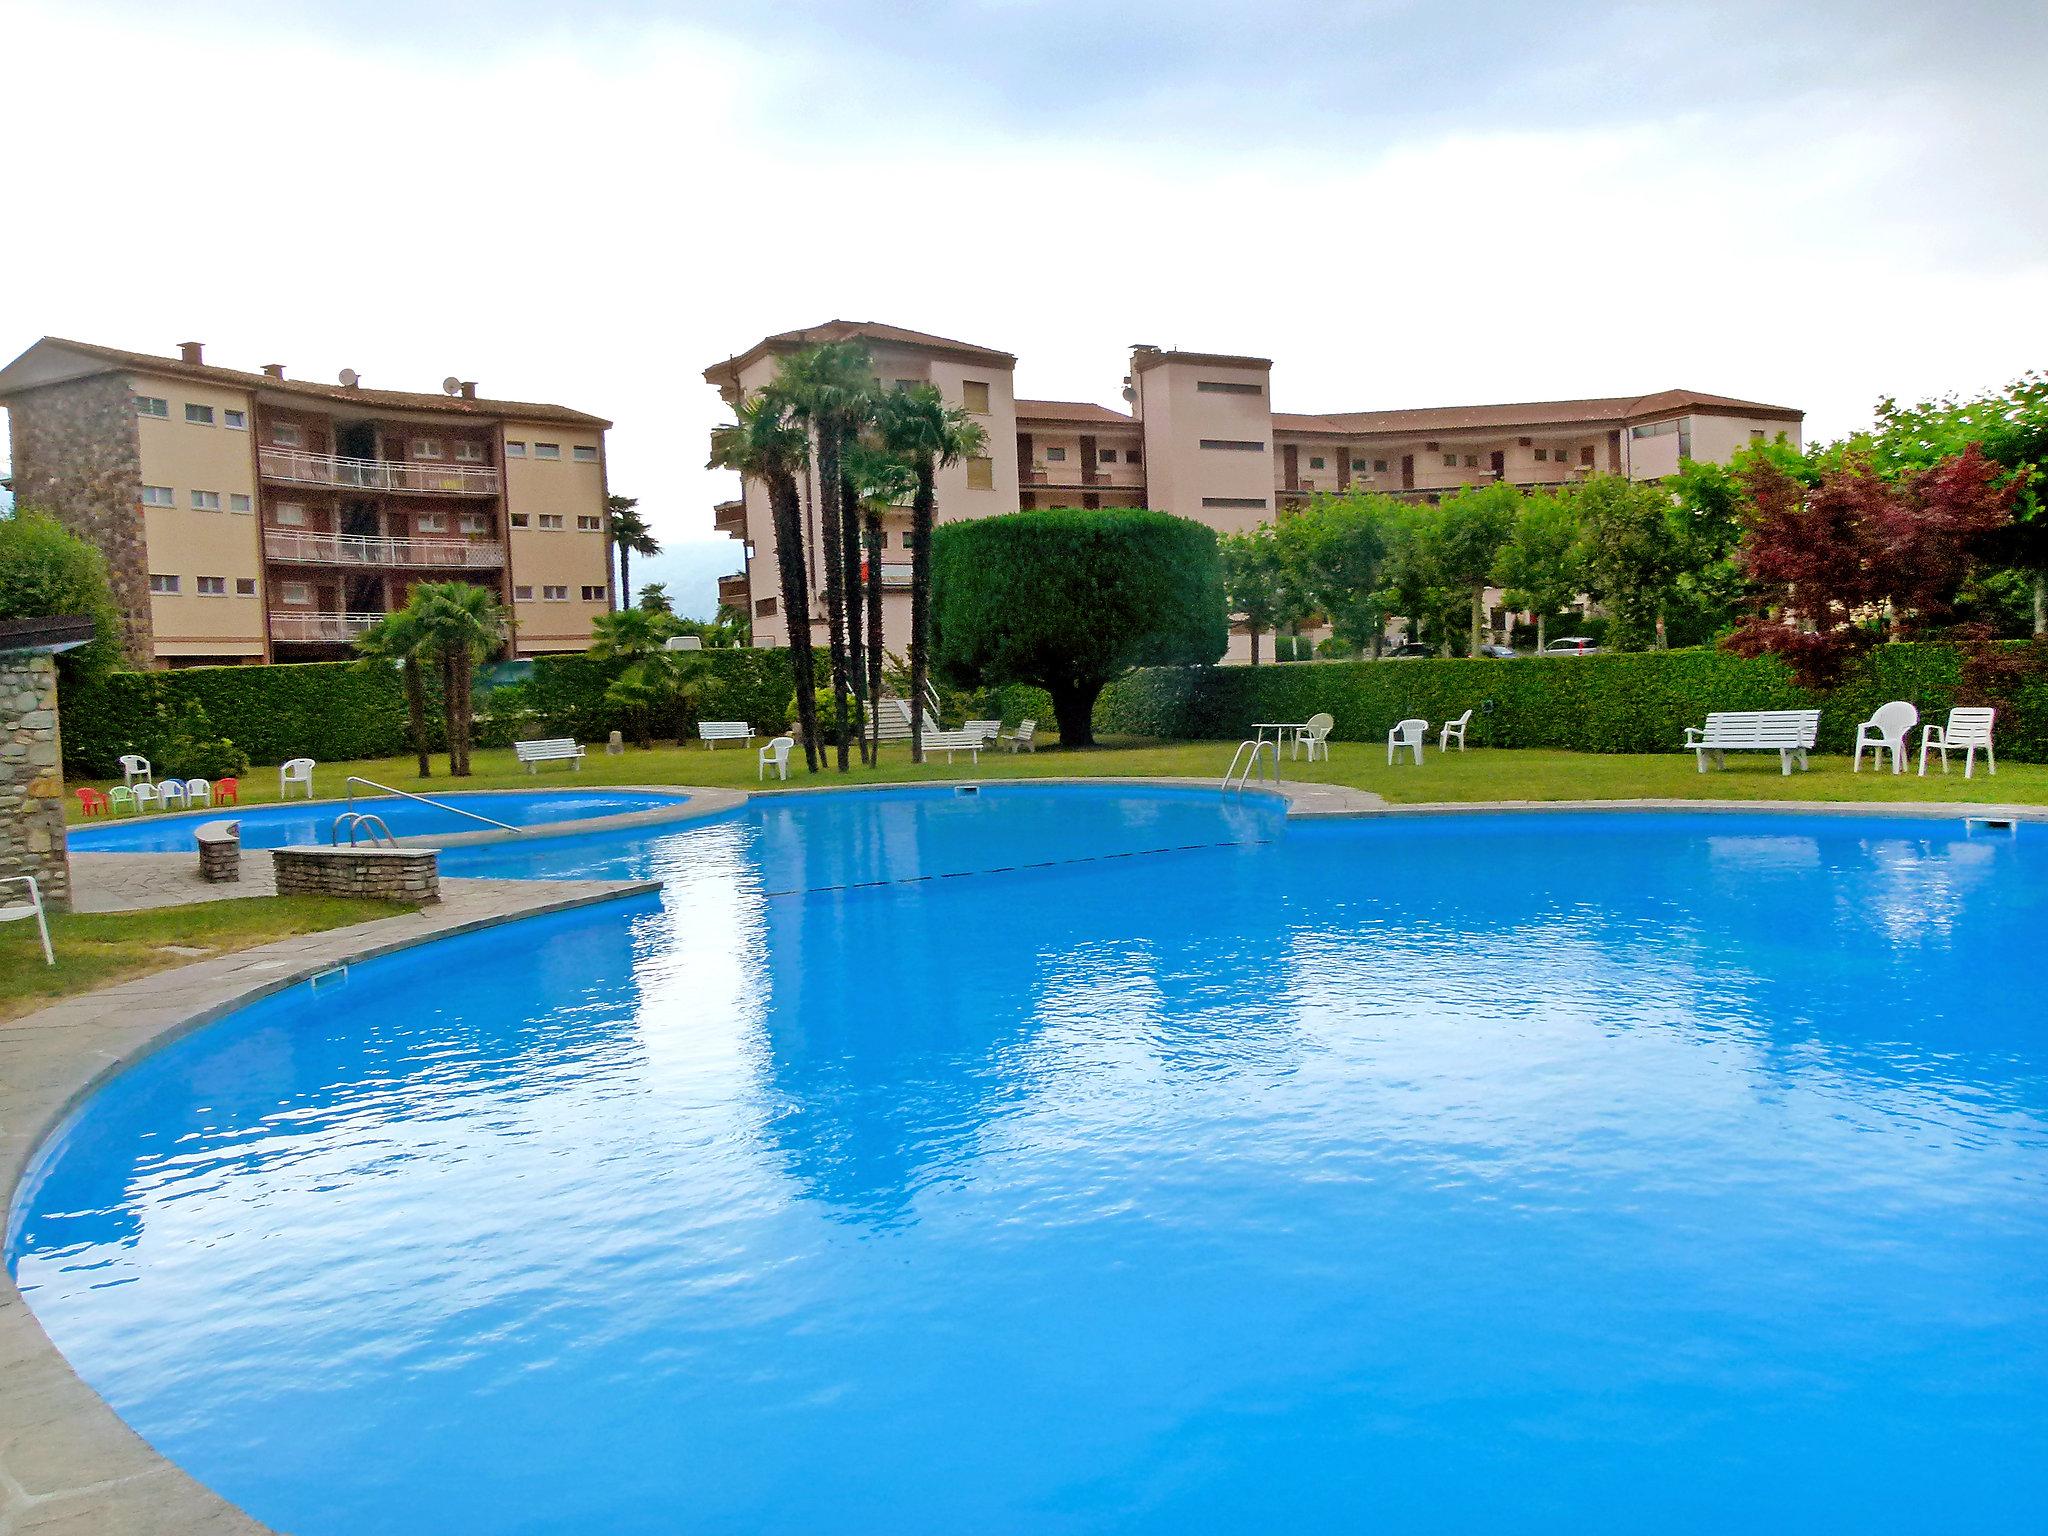 Foto 1 - Apartment in Brezzo di Bedero mit schwimmbad und blick auf die berge